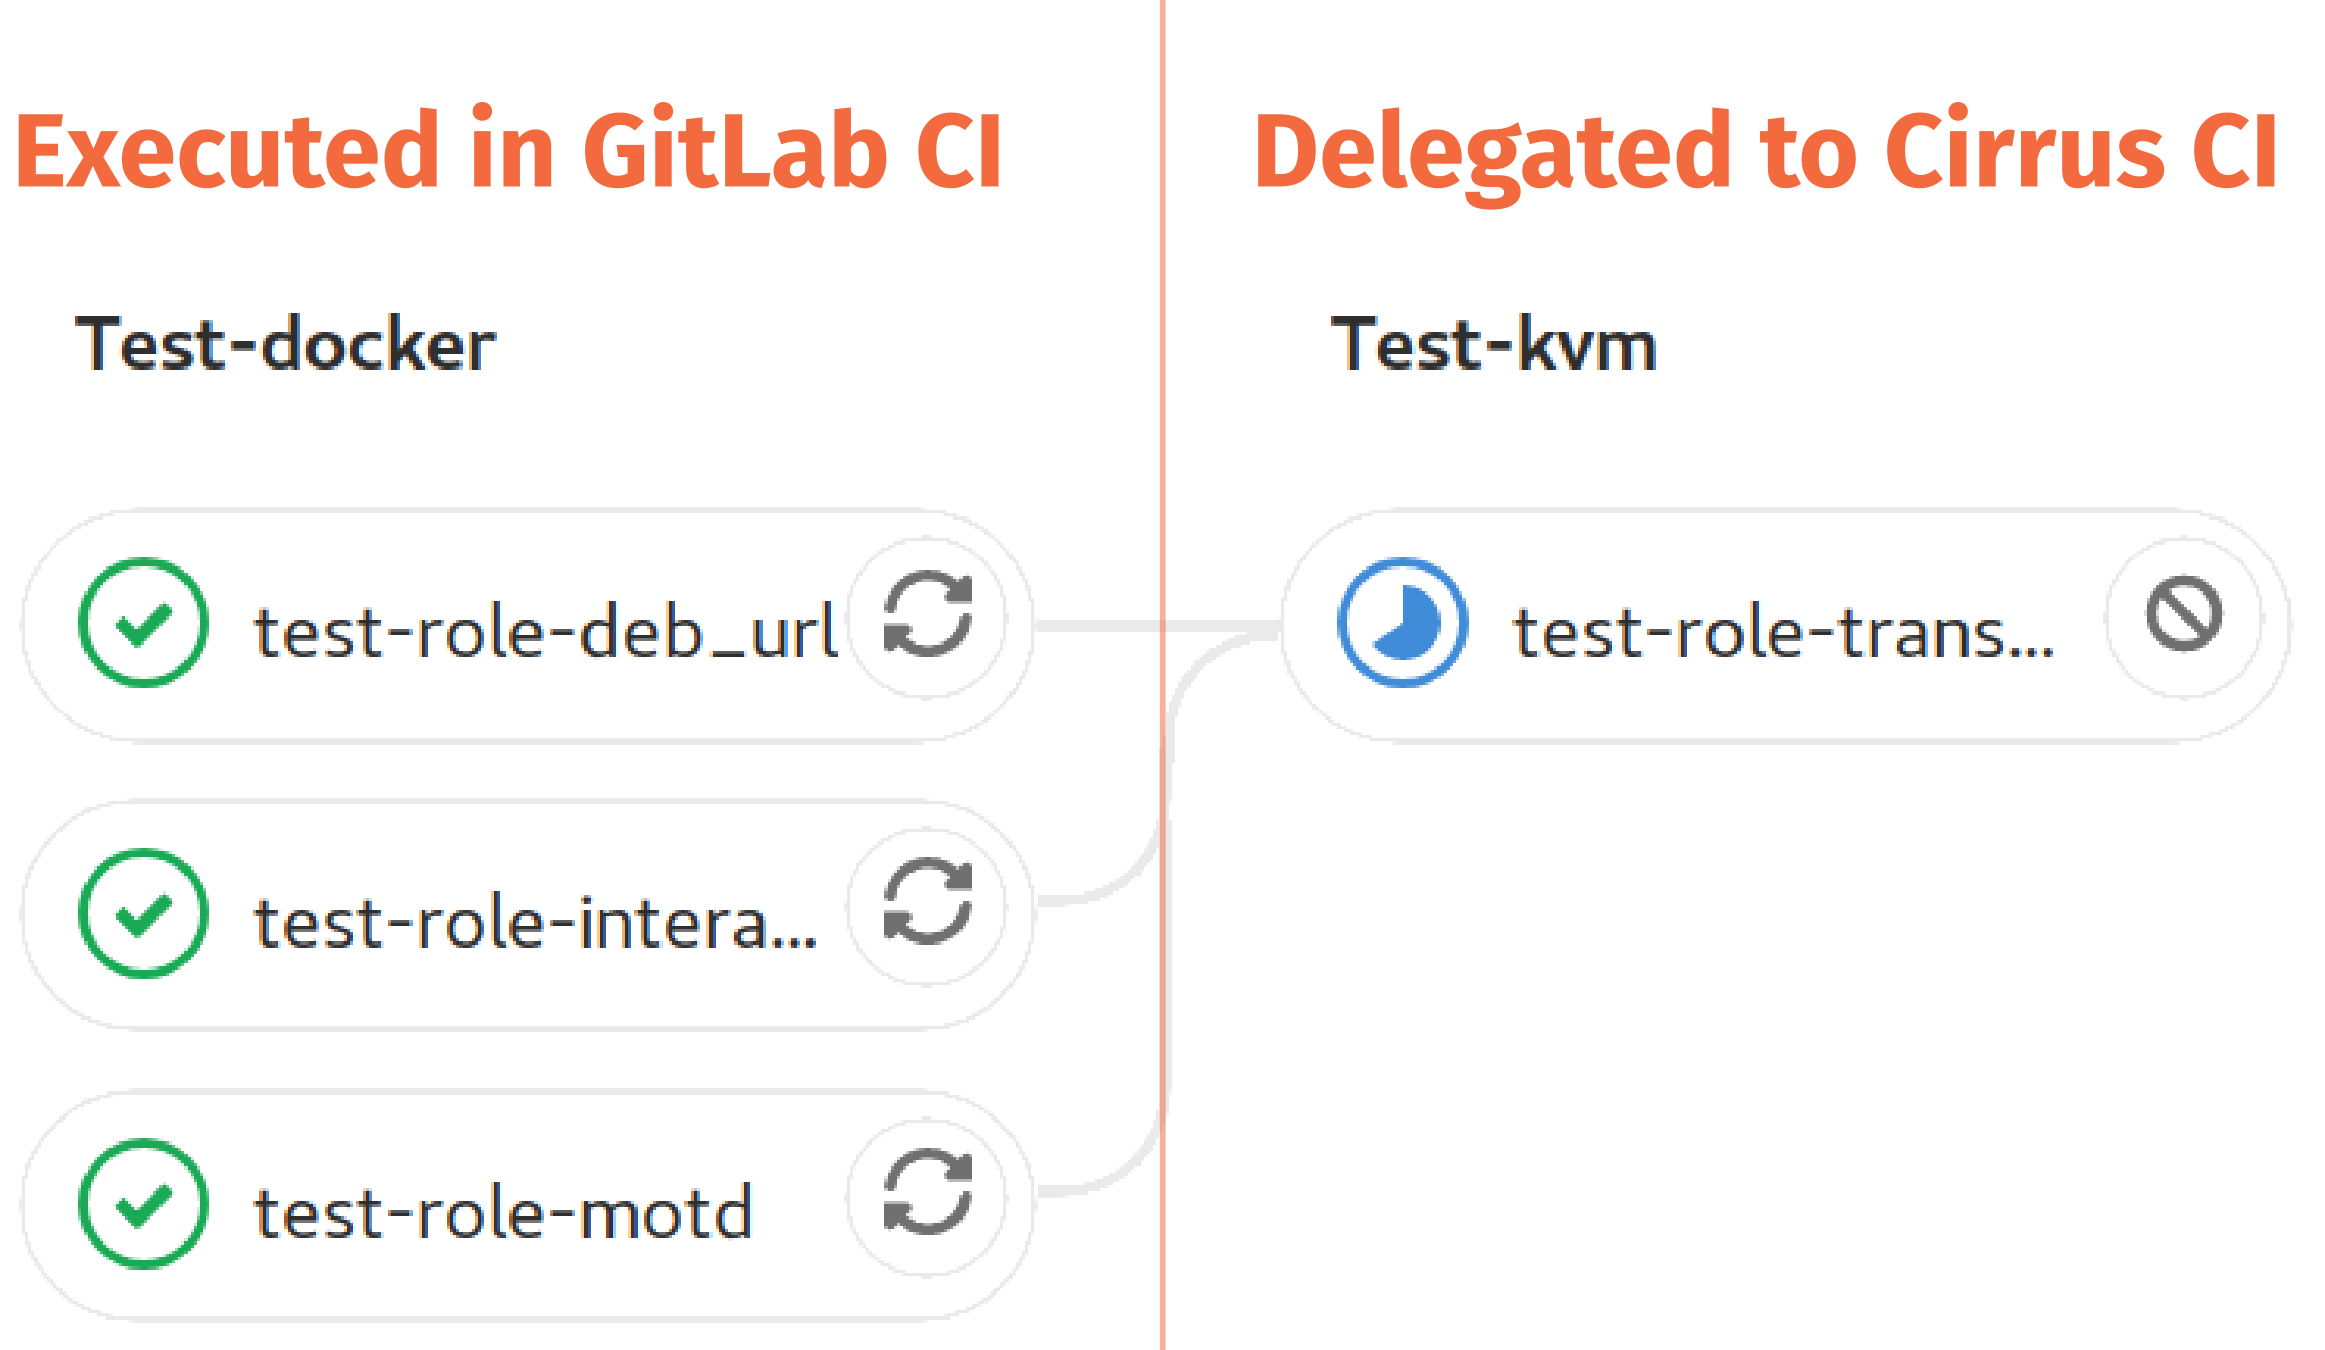 Cirrus jobs in GitLab CI